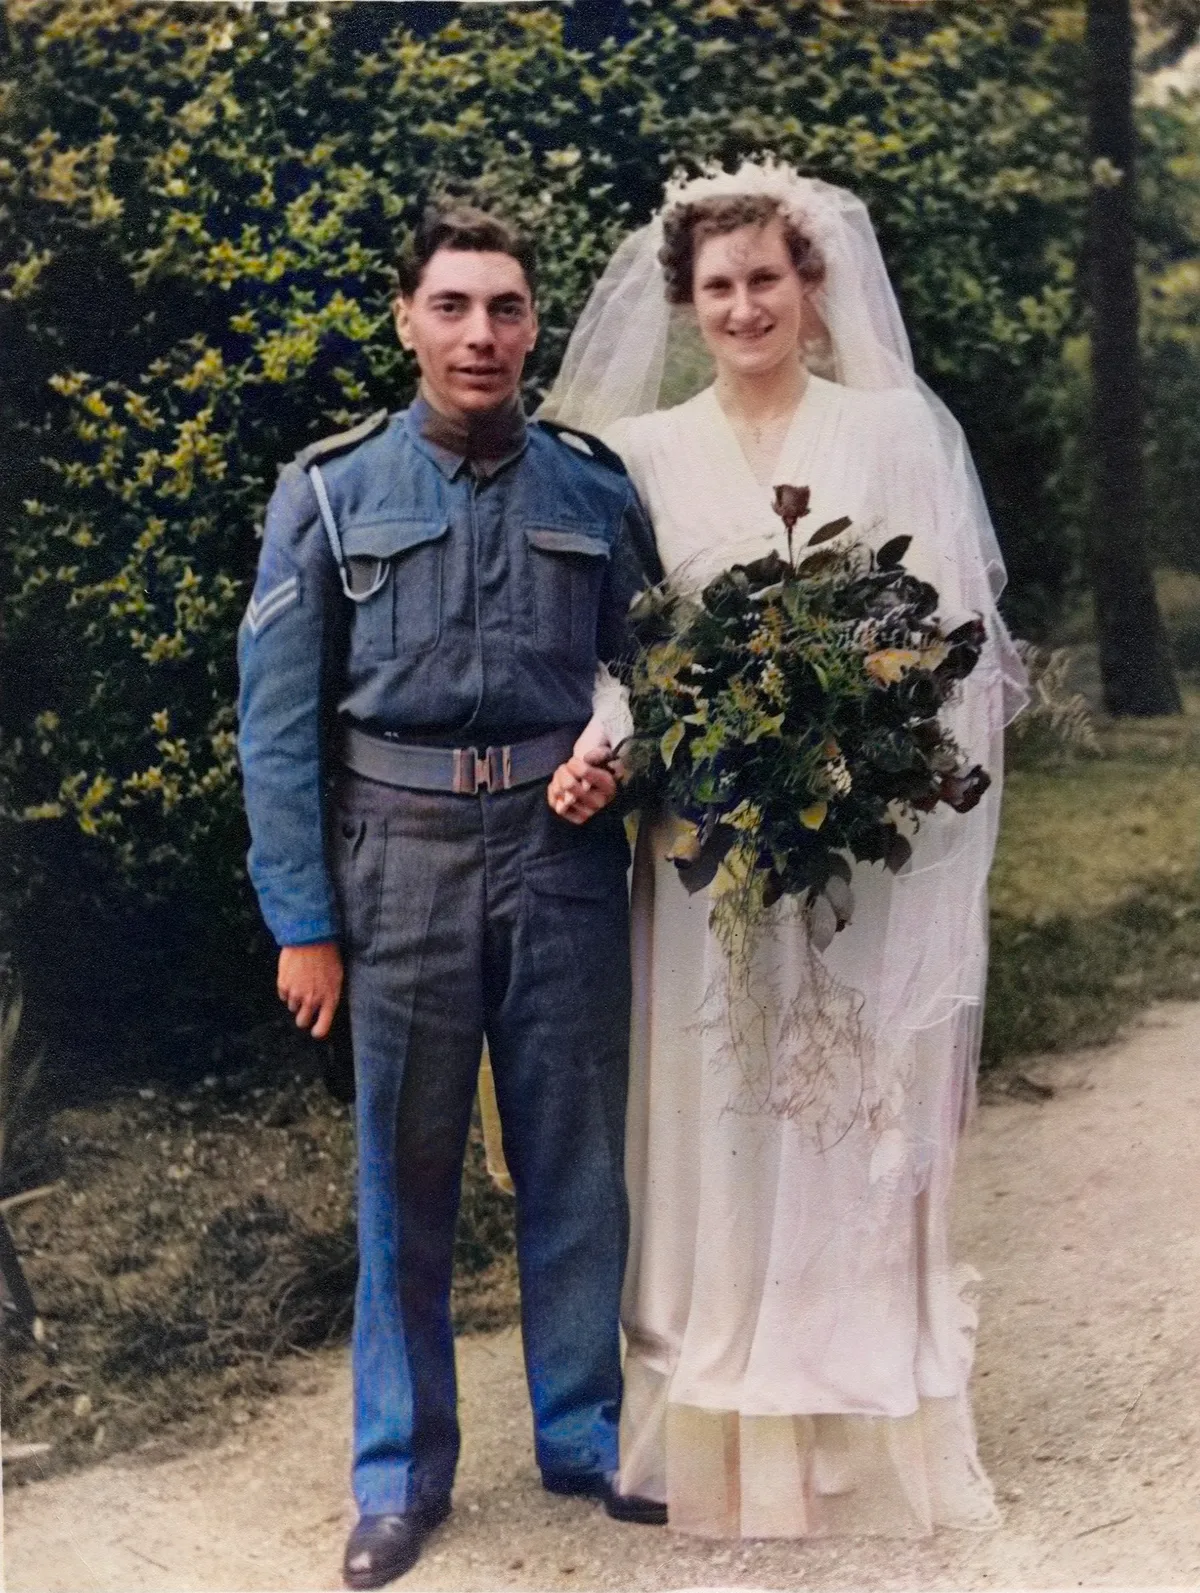 Colourised WW2 wedding photograph